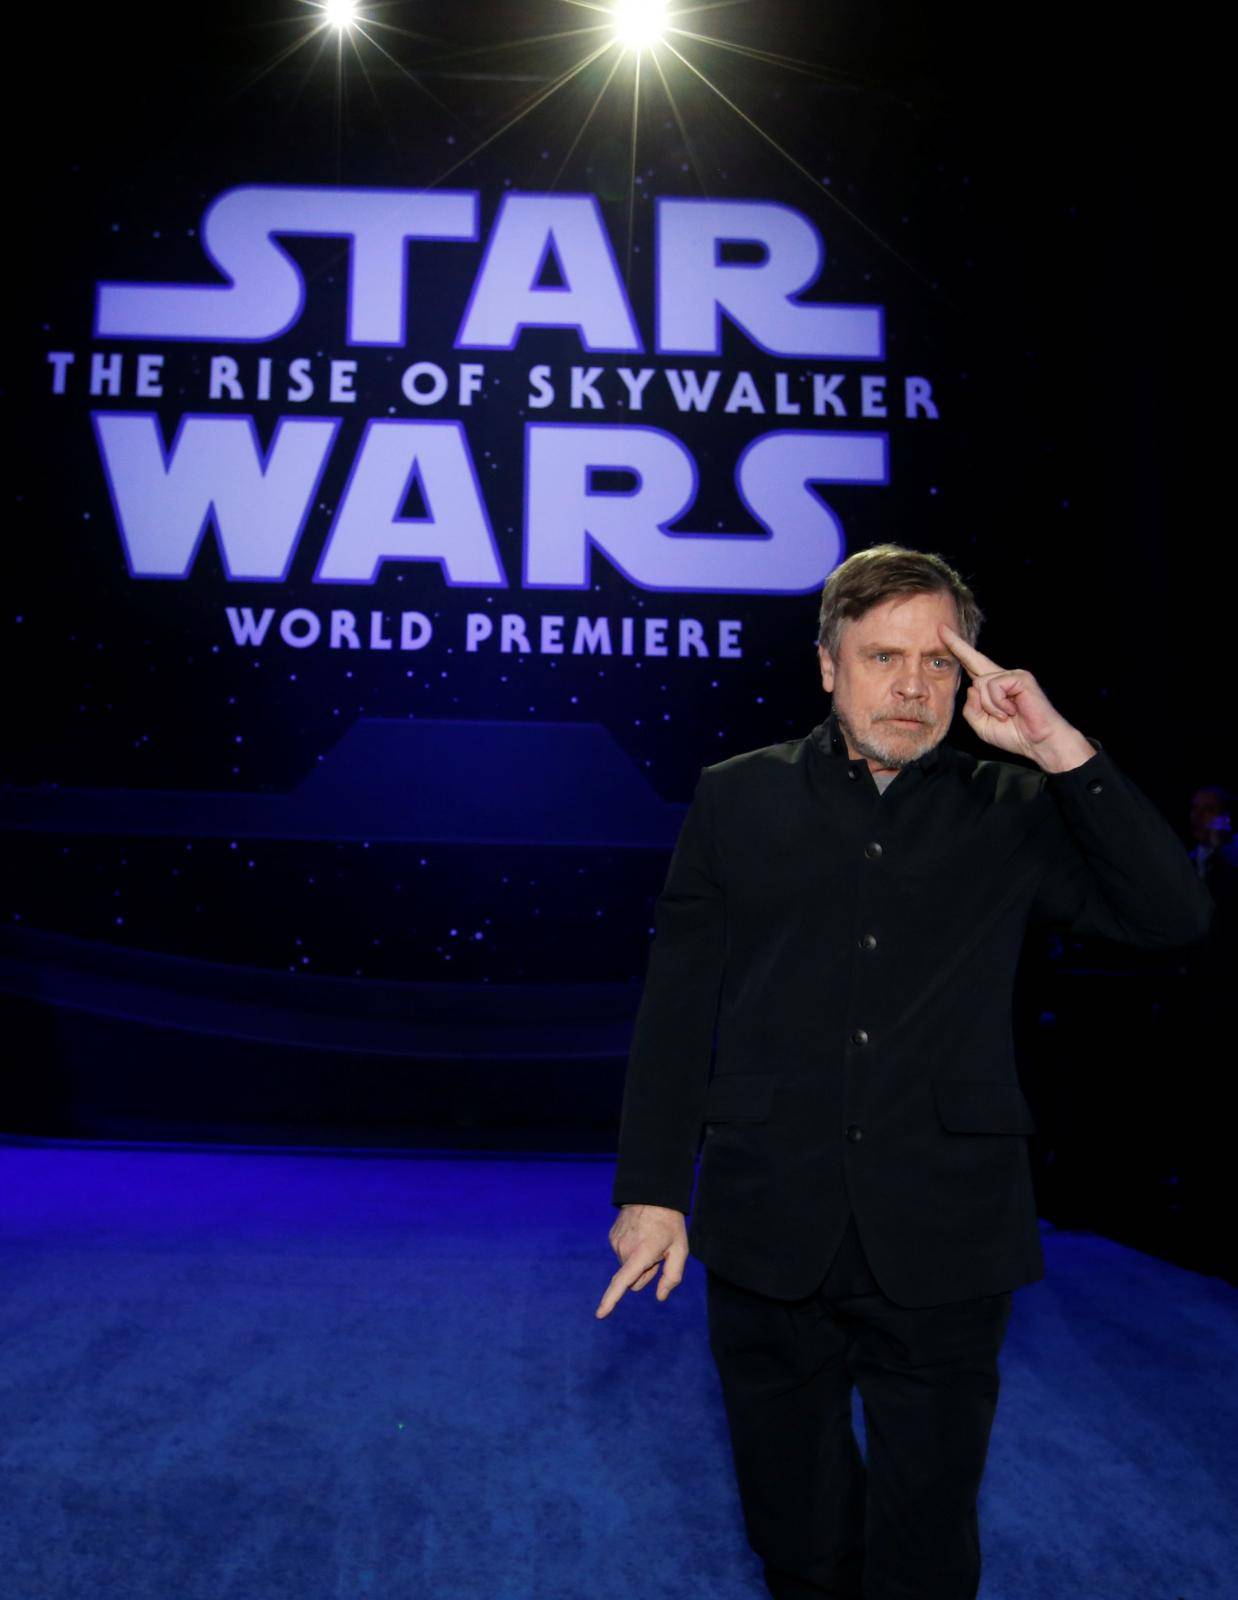 Premiere of “Star Wars: The Rise of Skywalker”